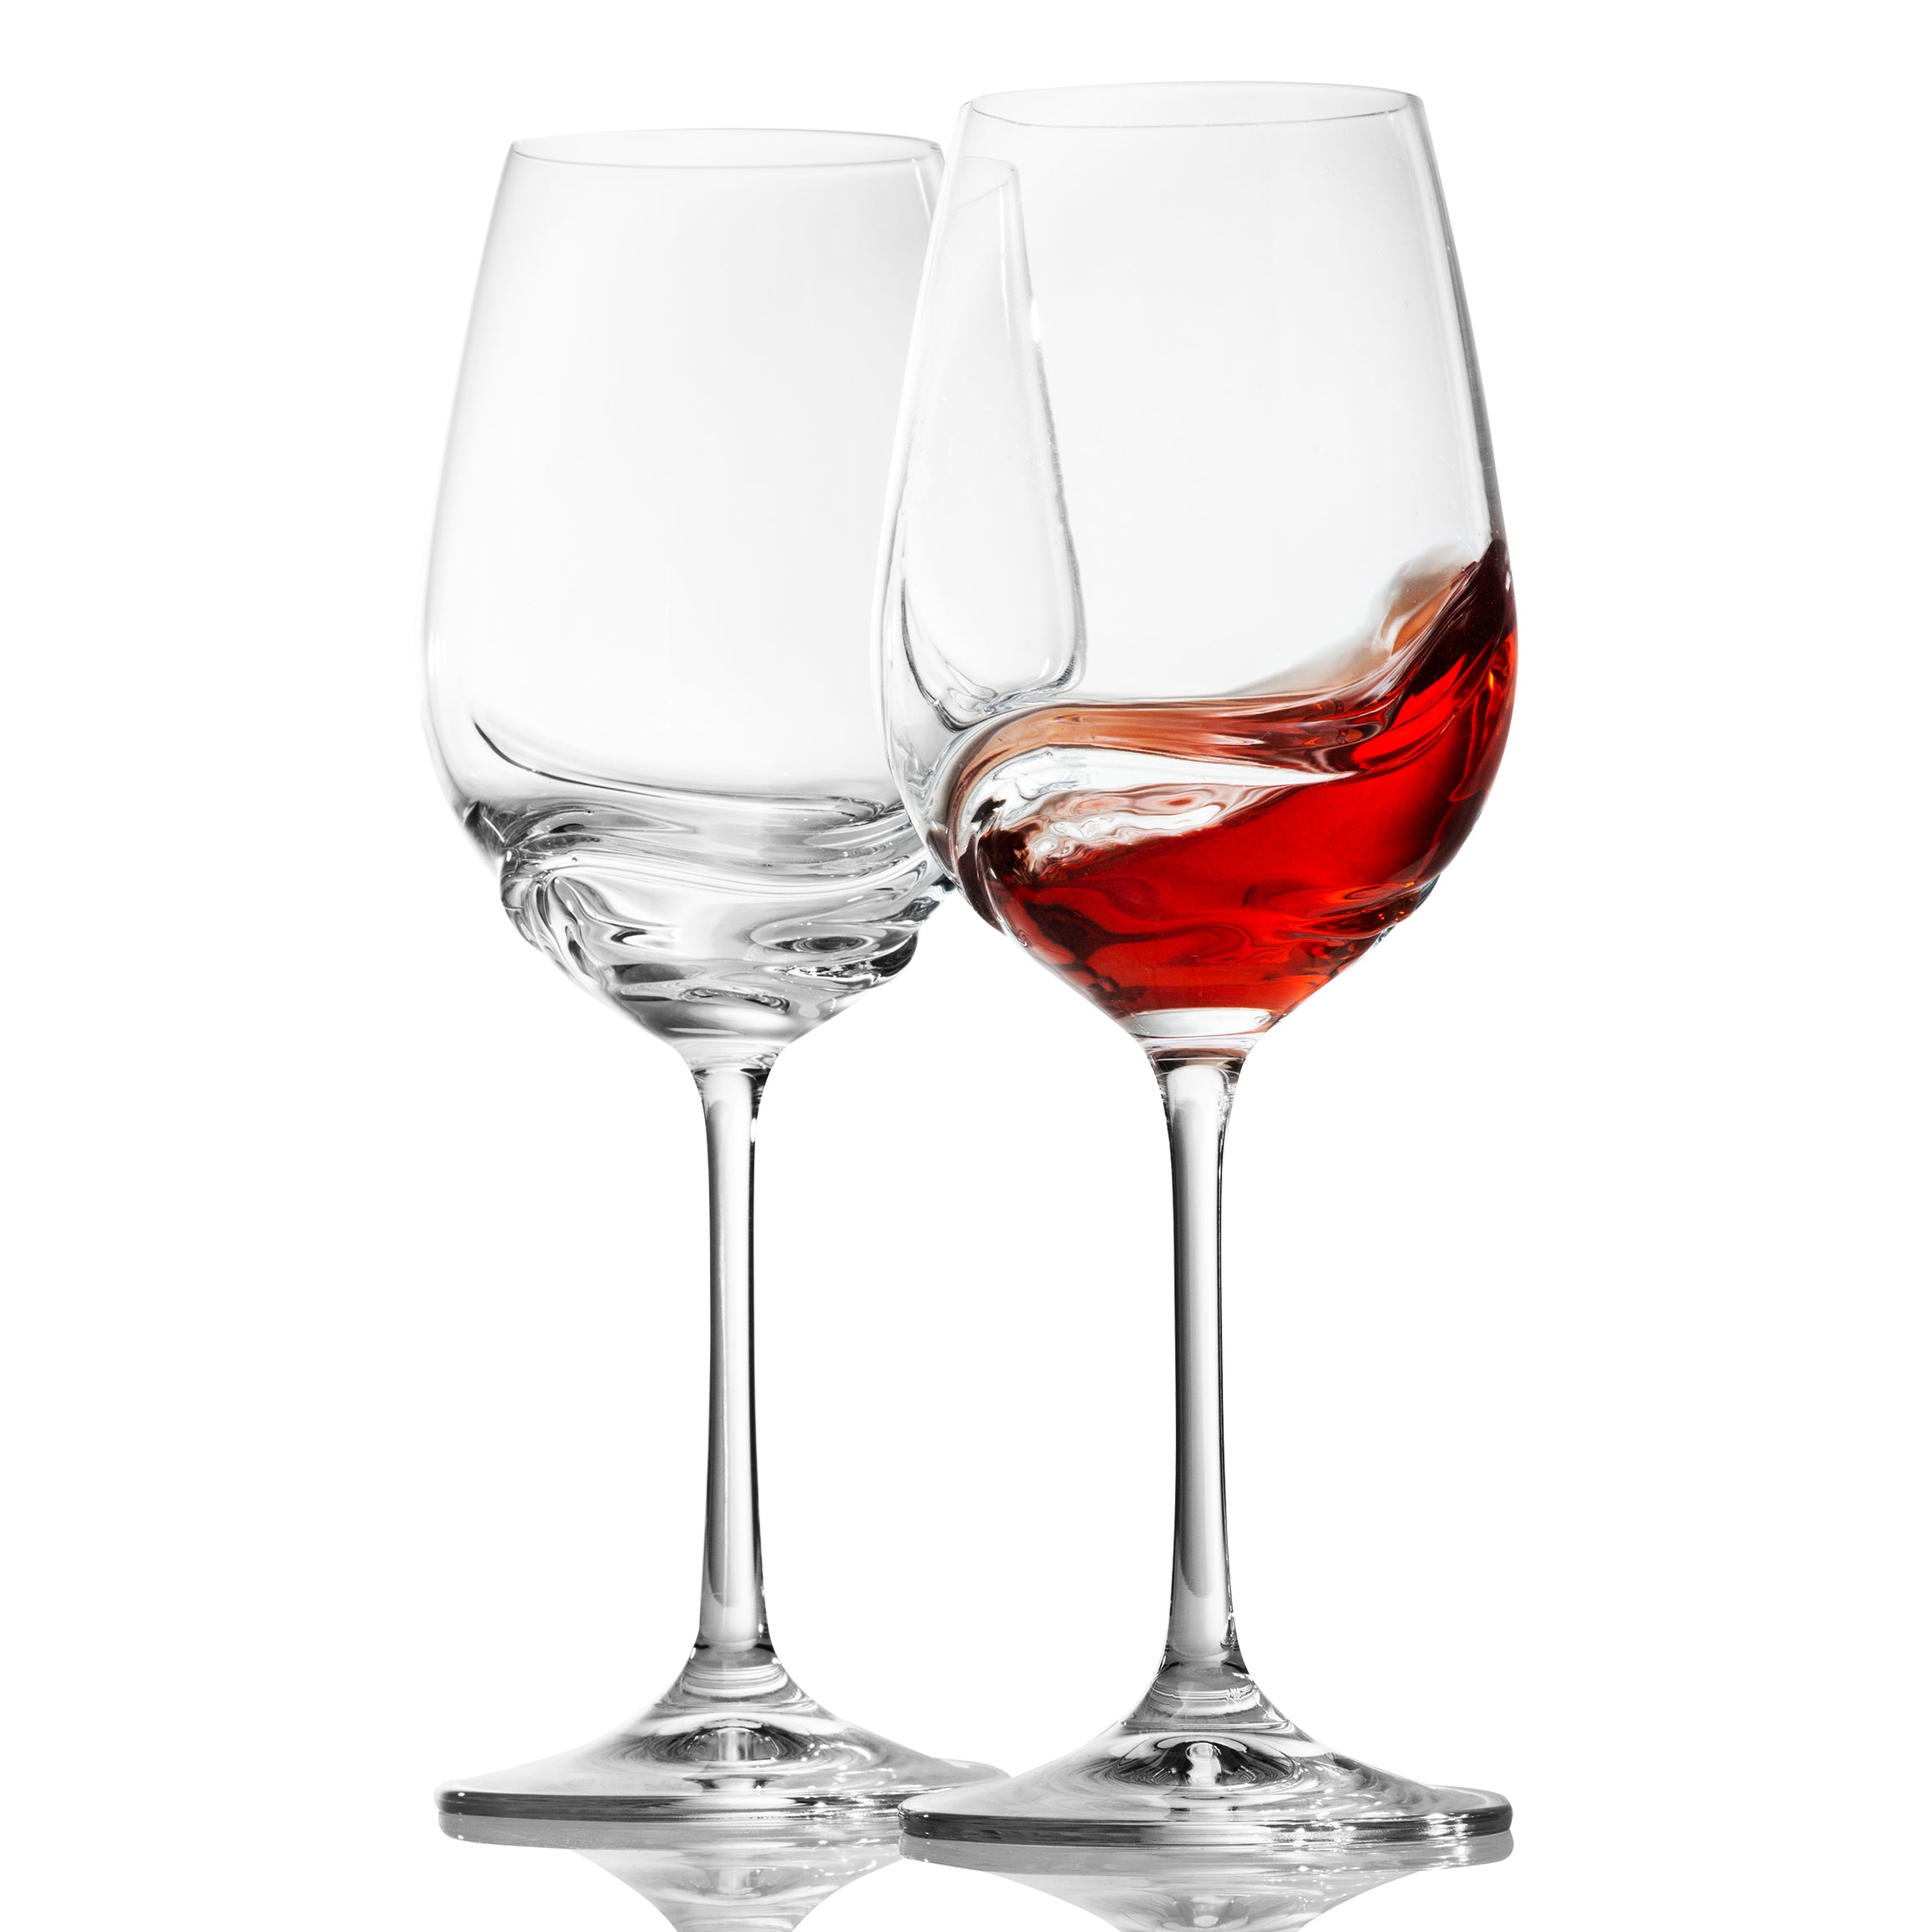 Turbulence Red Wine Glasses Set of 2 (11.8 oz)